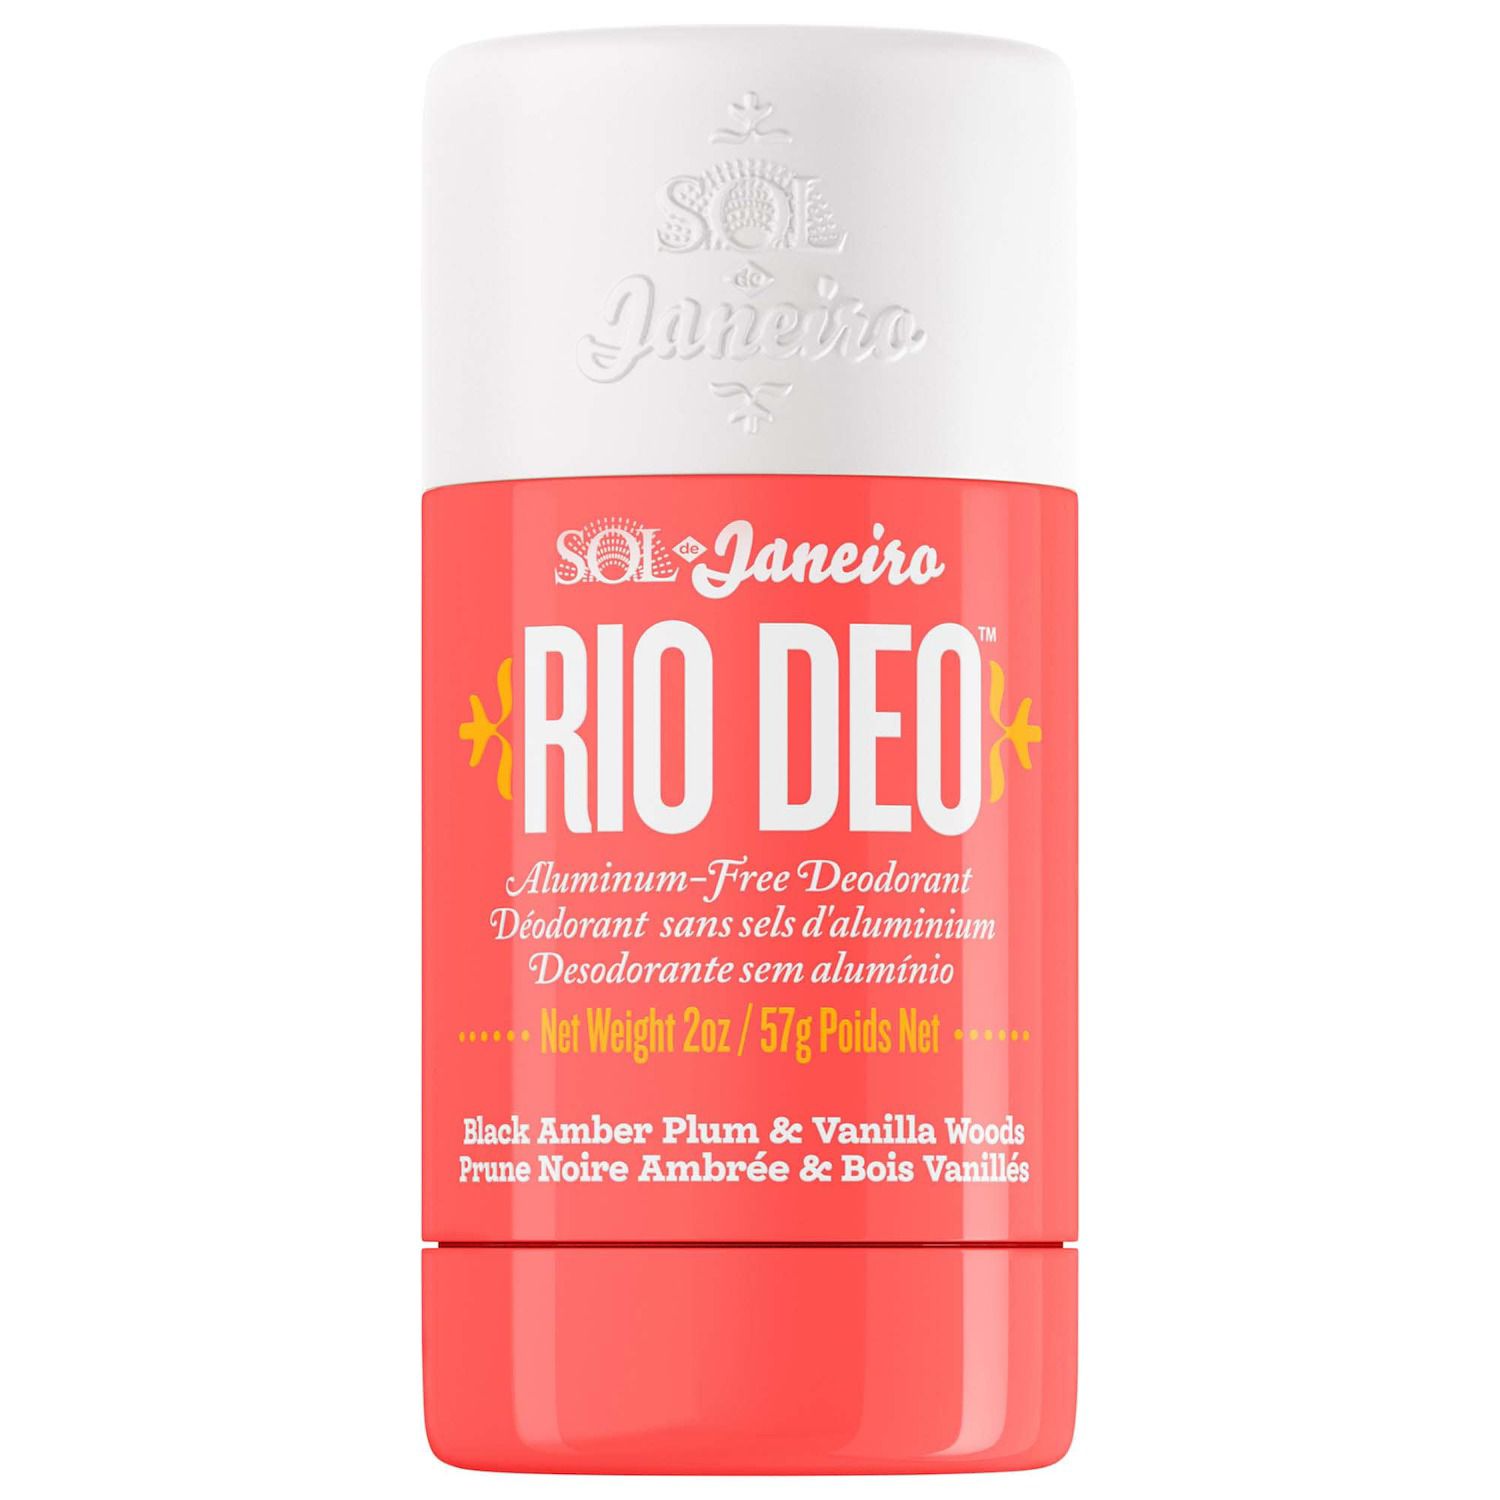 Sol De Janeiro Body Mist: Long Lasting The Library Of Fragrance, Fresh &  Moisturizing Brazilian Crush Spray For Health & Beauty From Starnew, $5.89